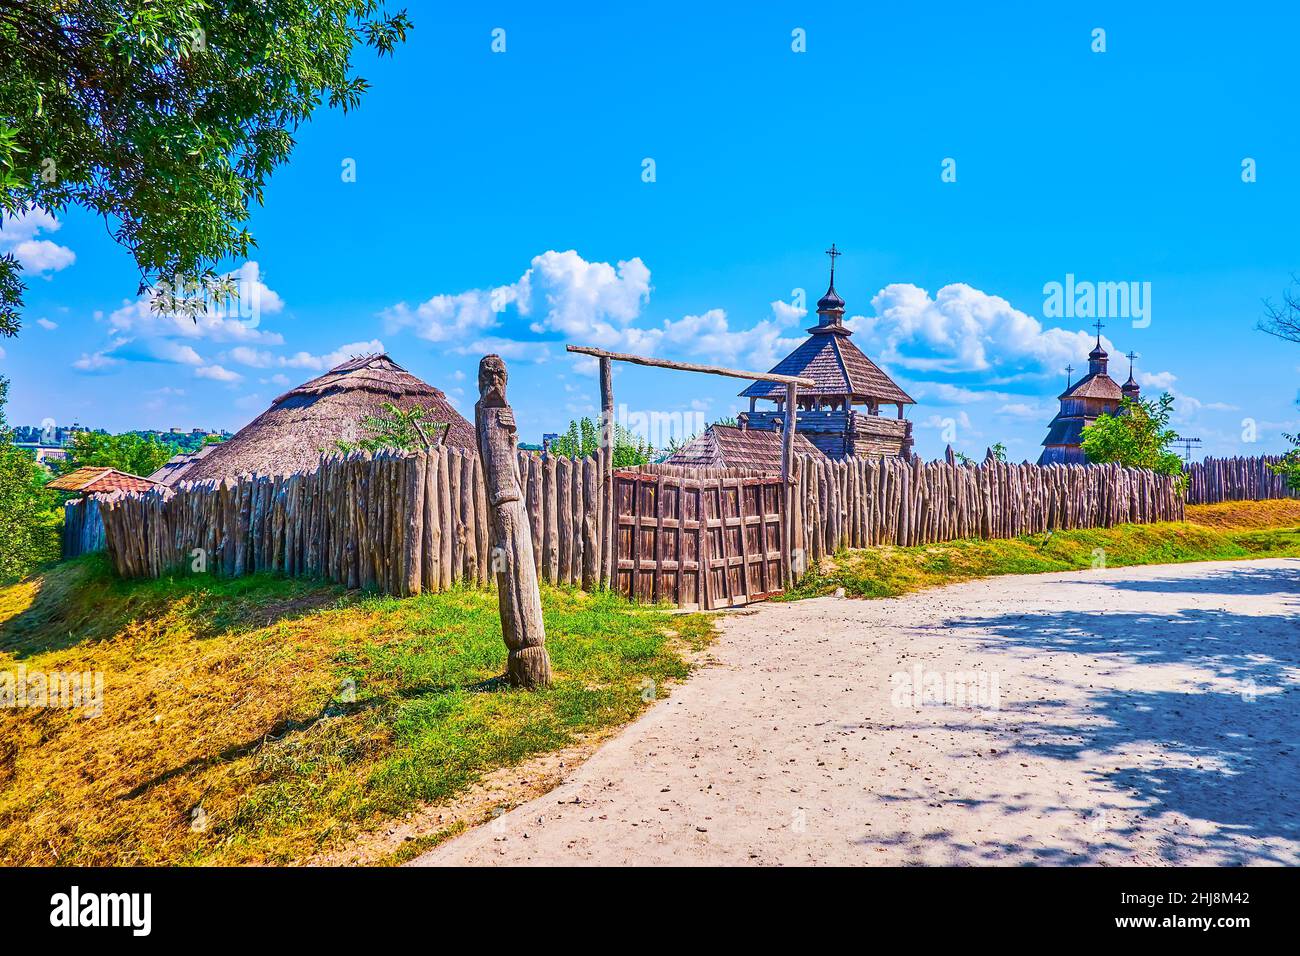 The historical Zaporizhian Sich Fort with its wooden stockade and gates, Zaporizhzhia, Ukraine Stock Photo